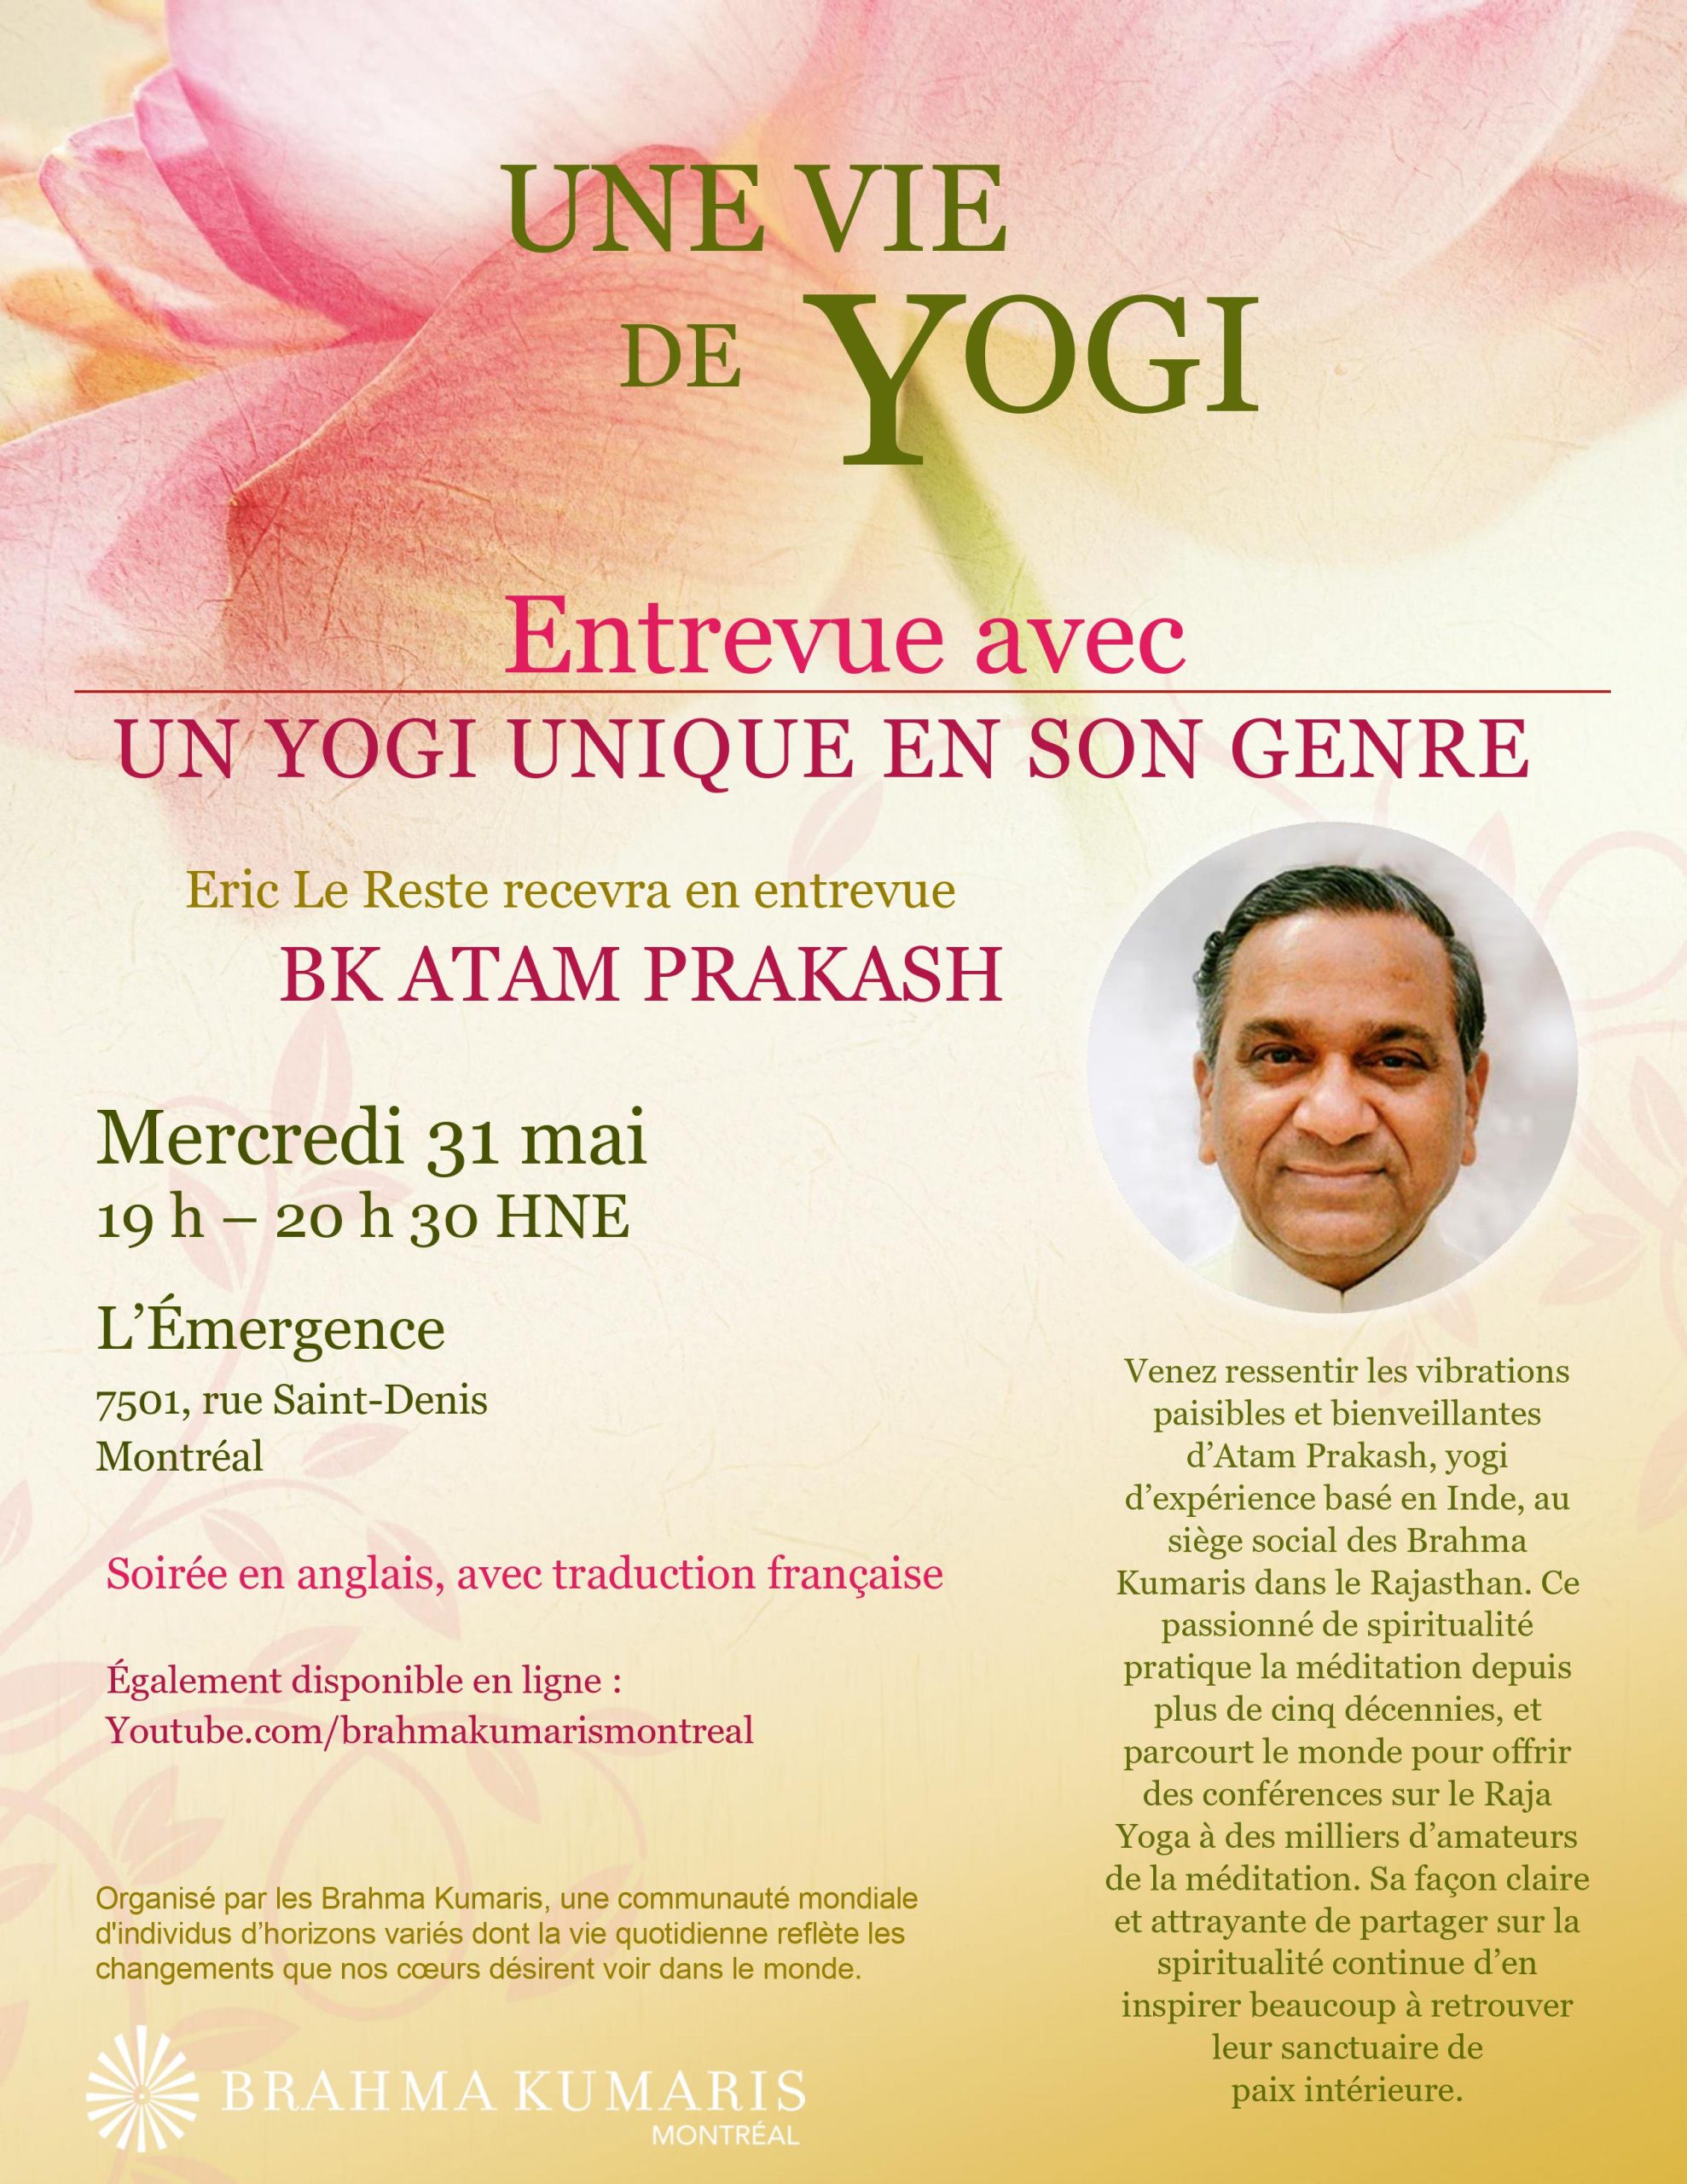 Conférence Une vie de yogi